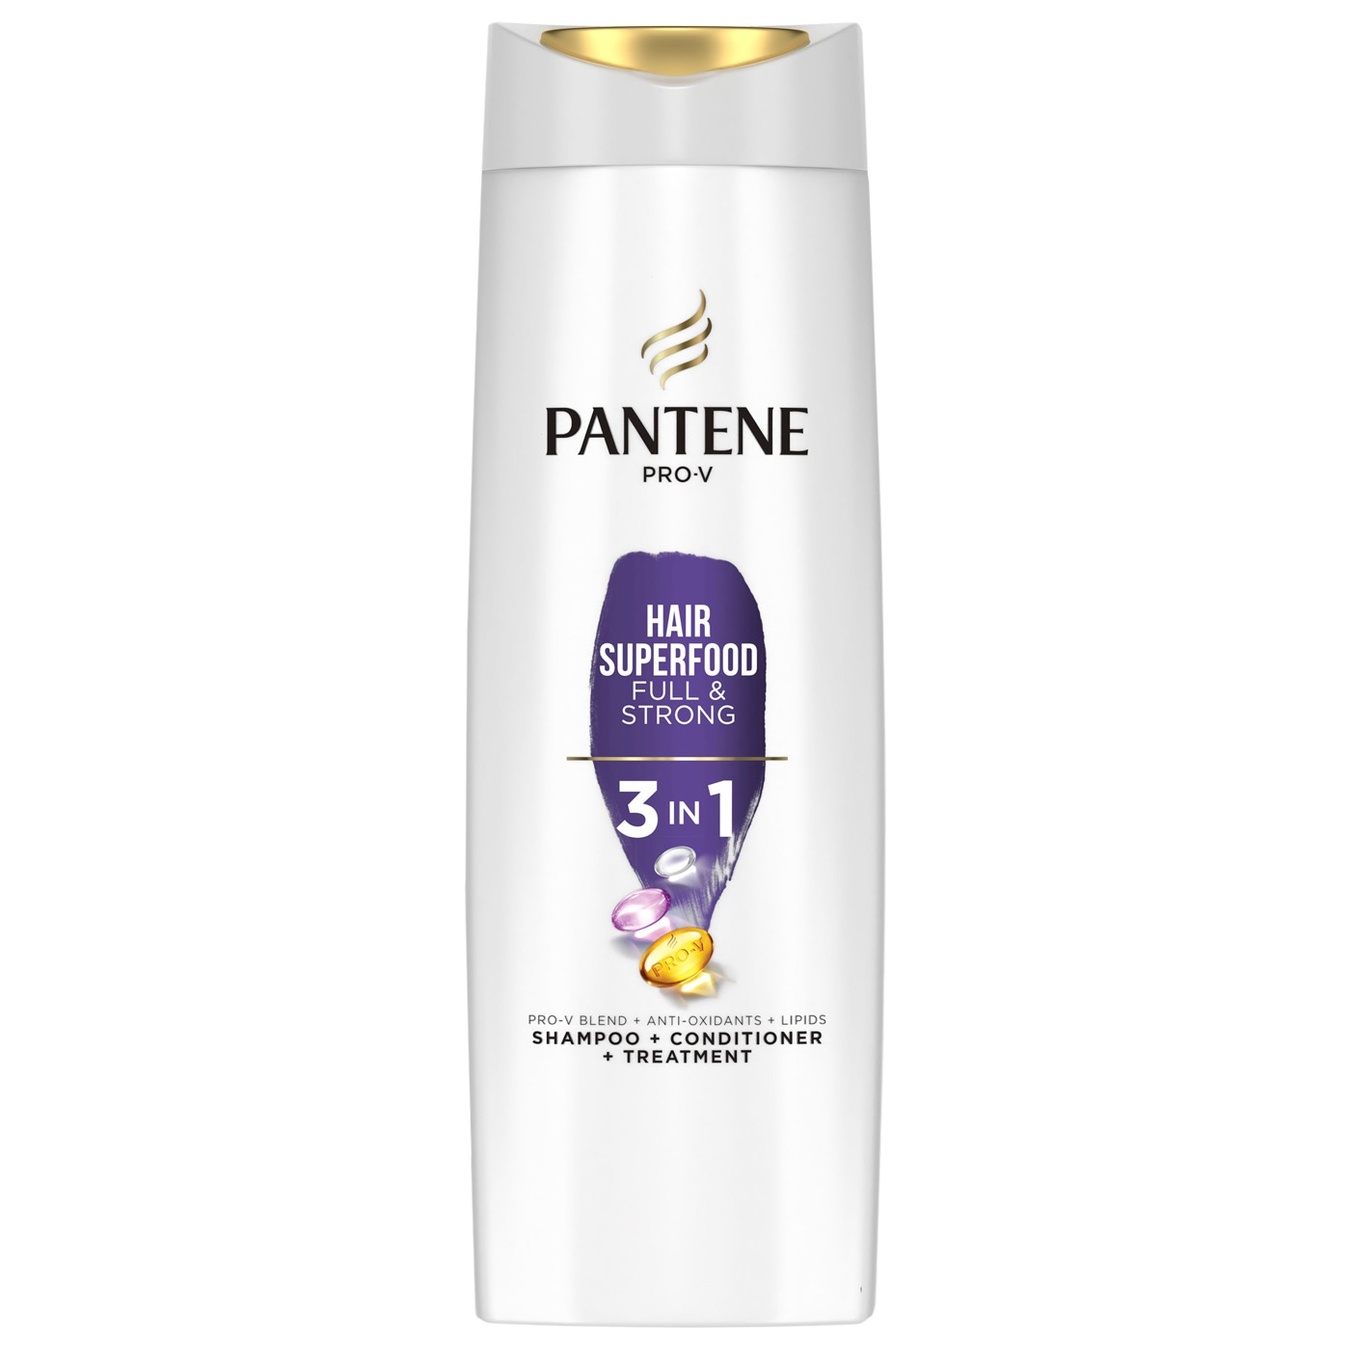 Shampoo Pantene 3 in 1 voluminous and strong 360 ml